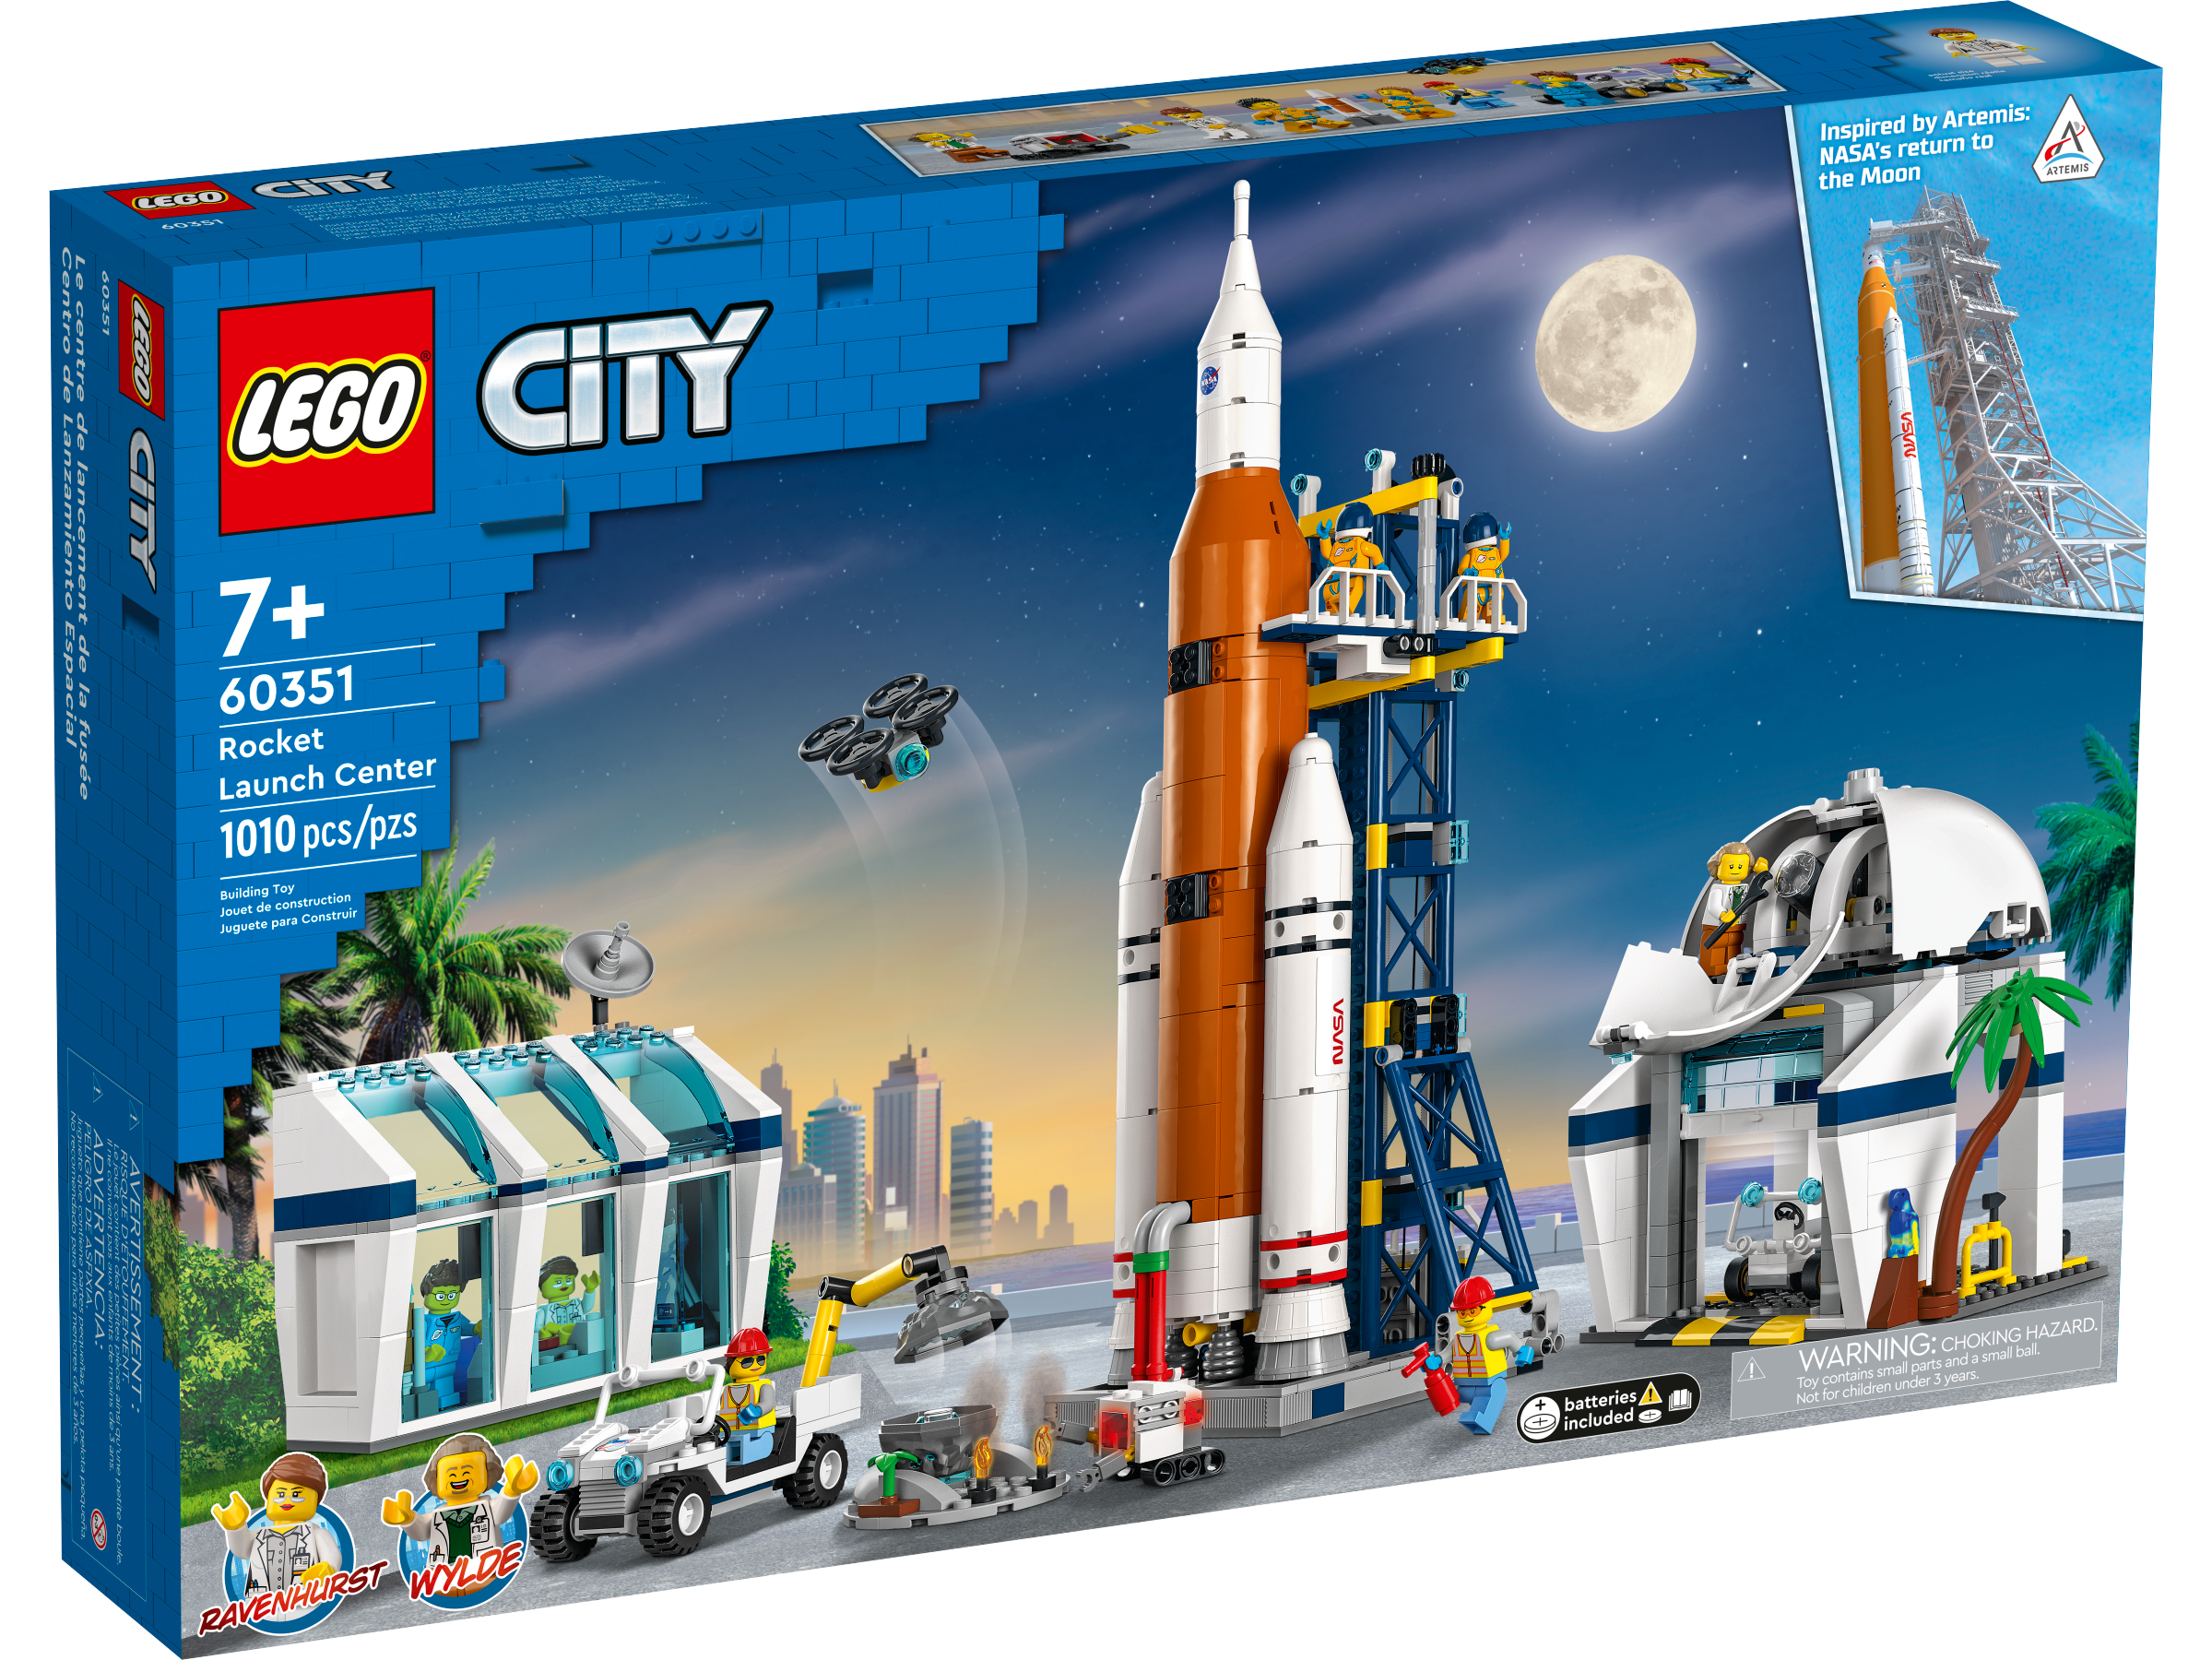 Rocket Launch Center 60351, City